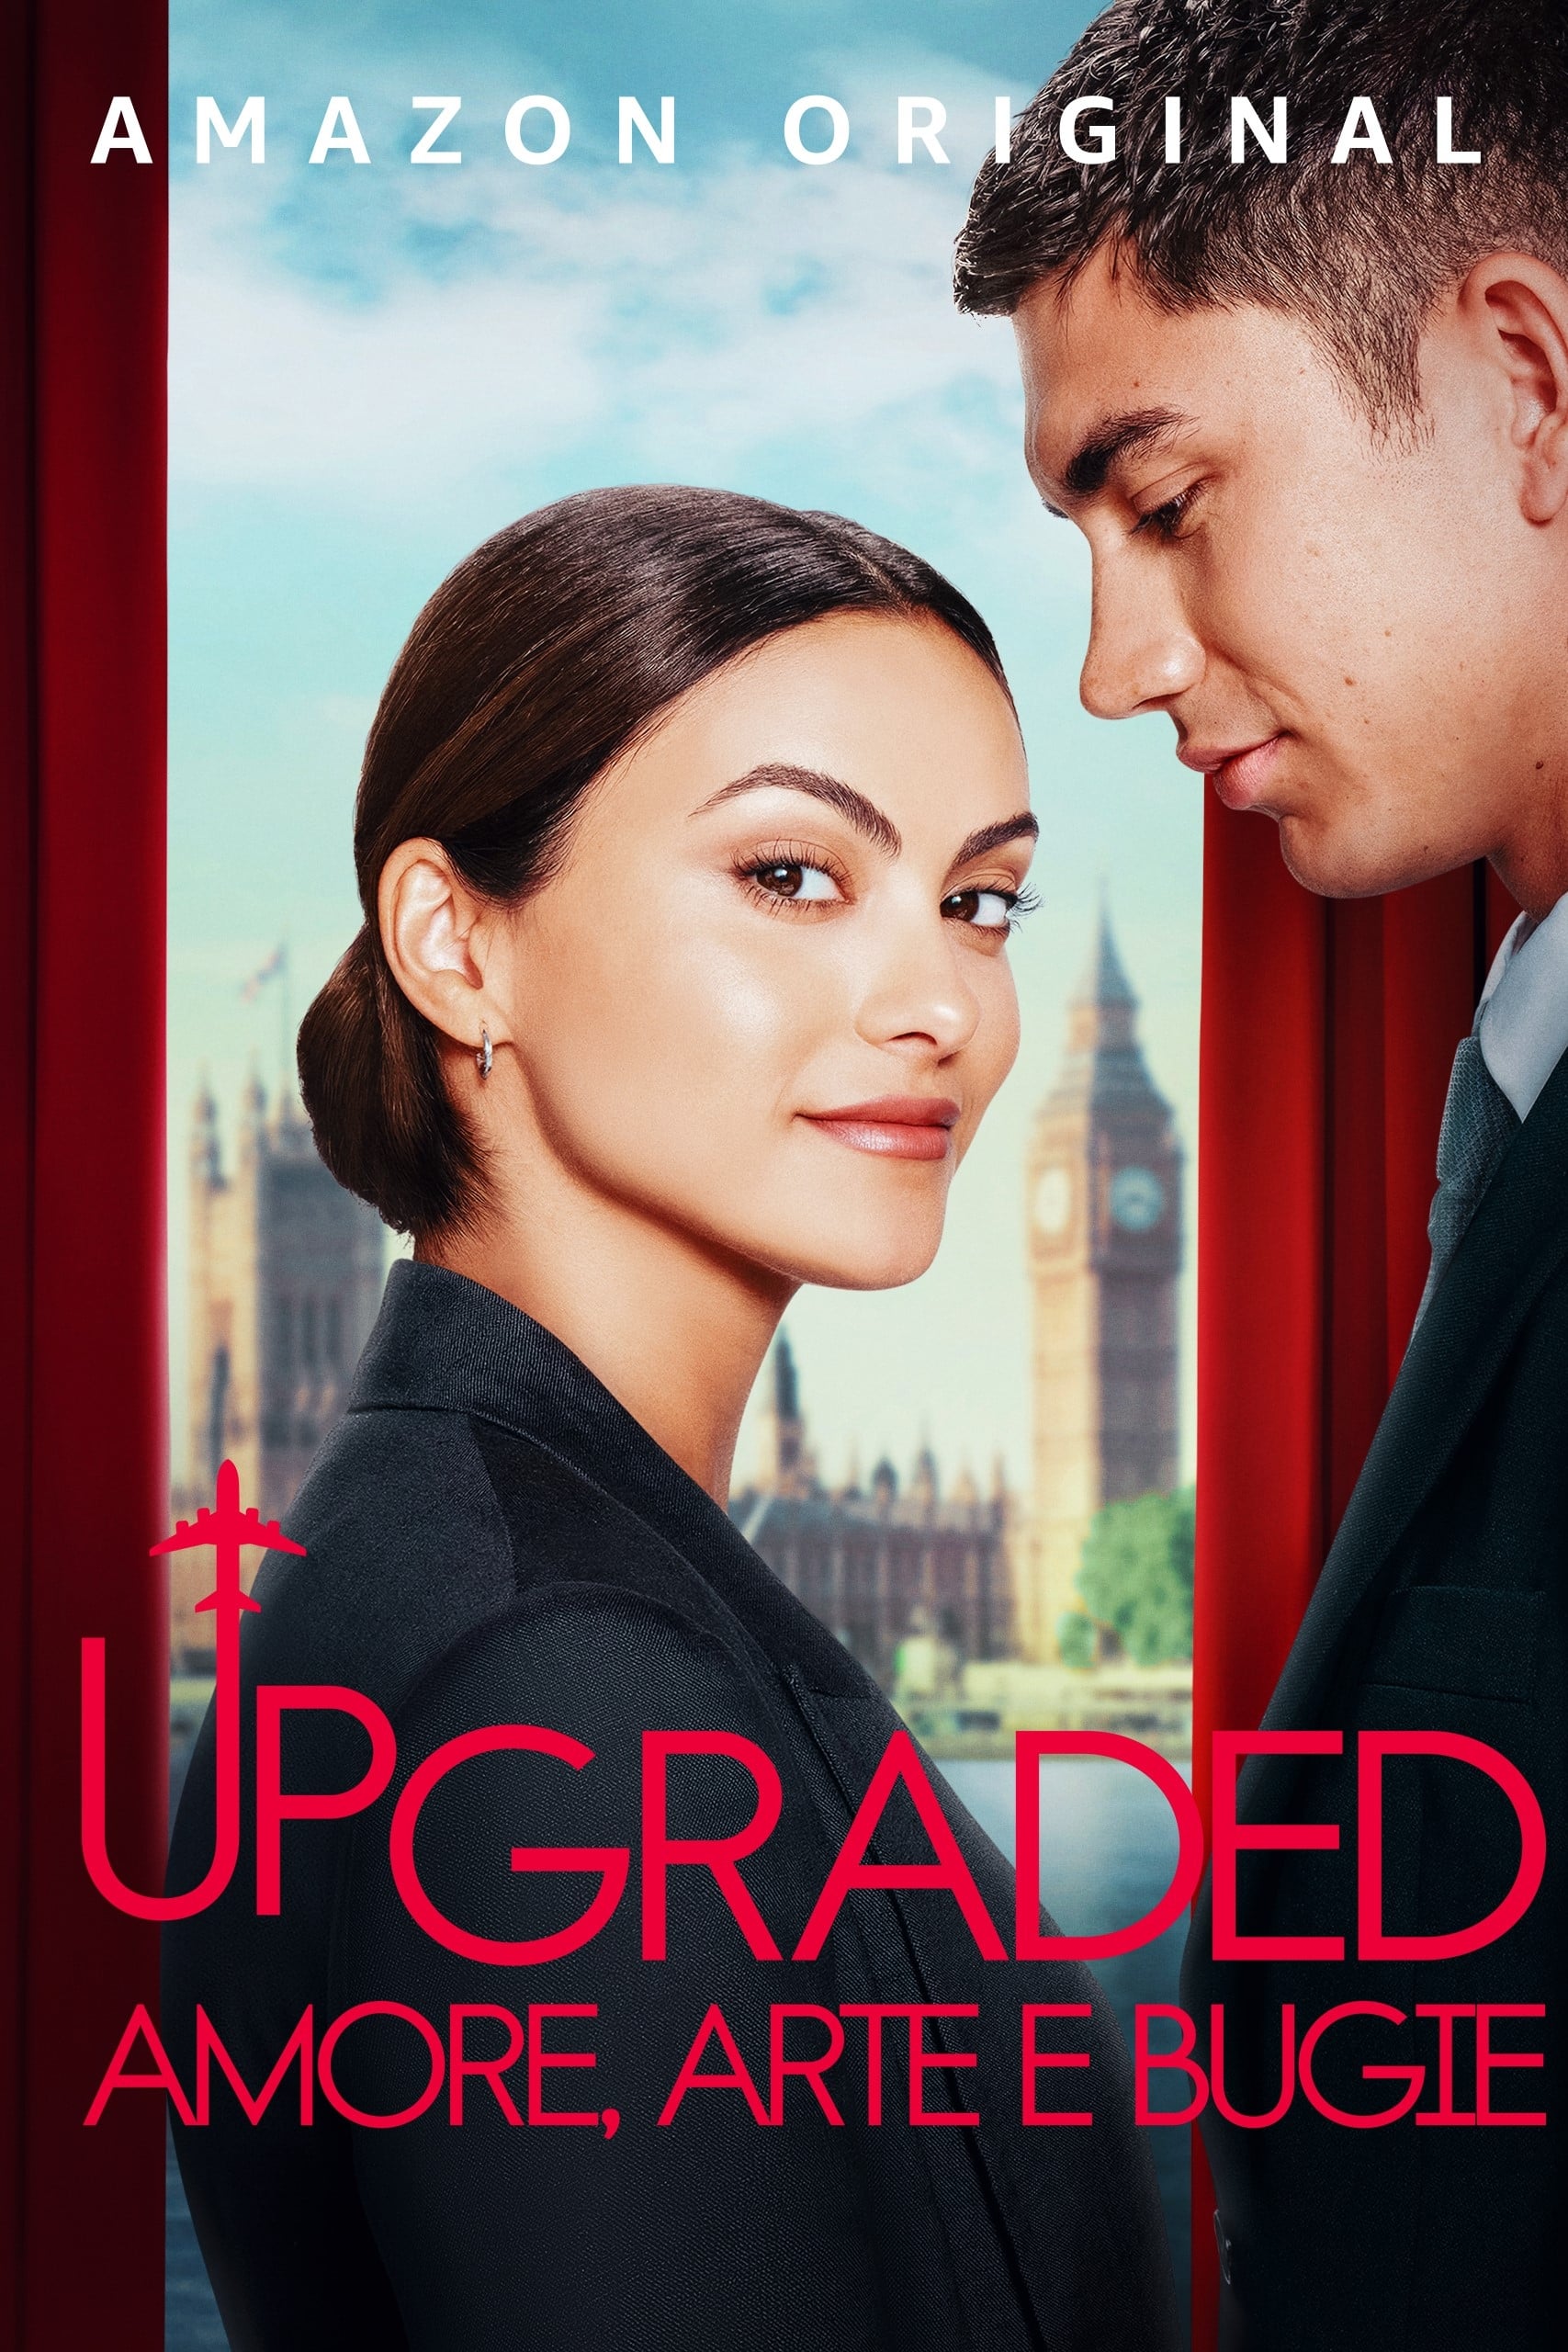 Upgraded: amore, arte e bugie film